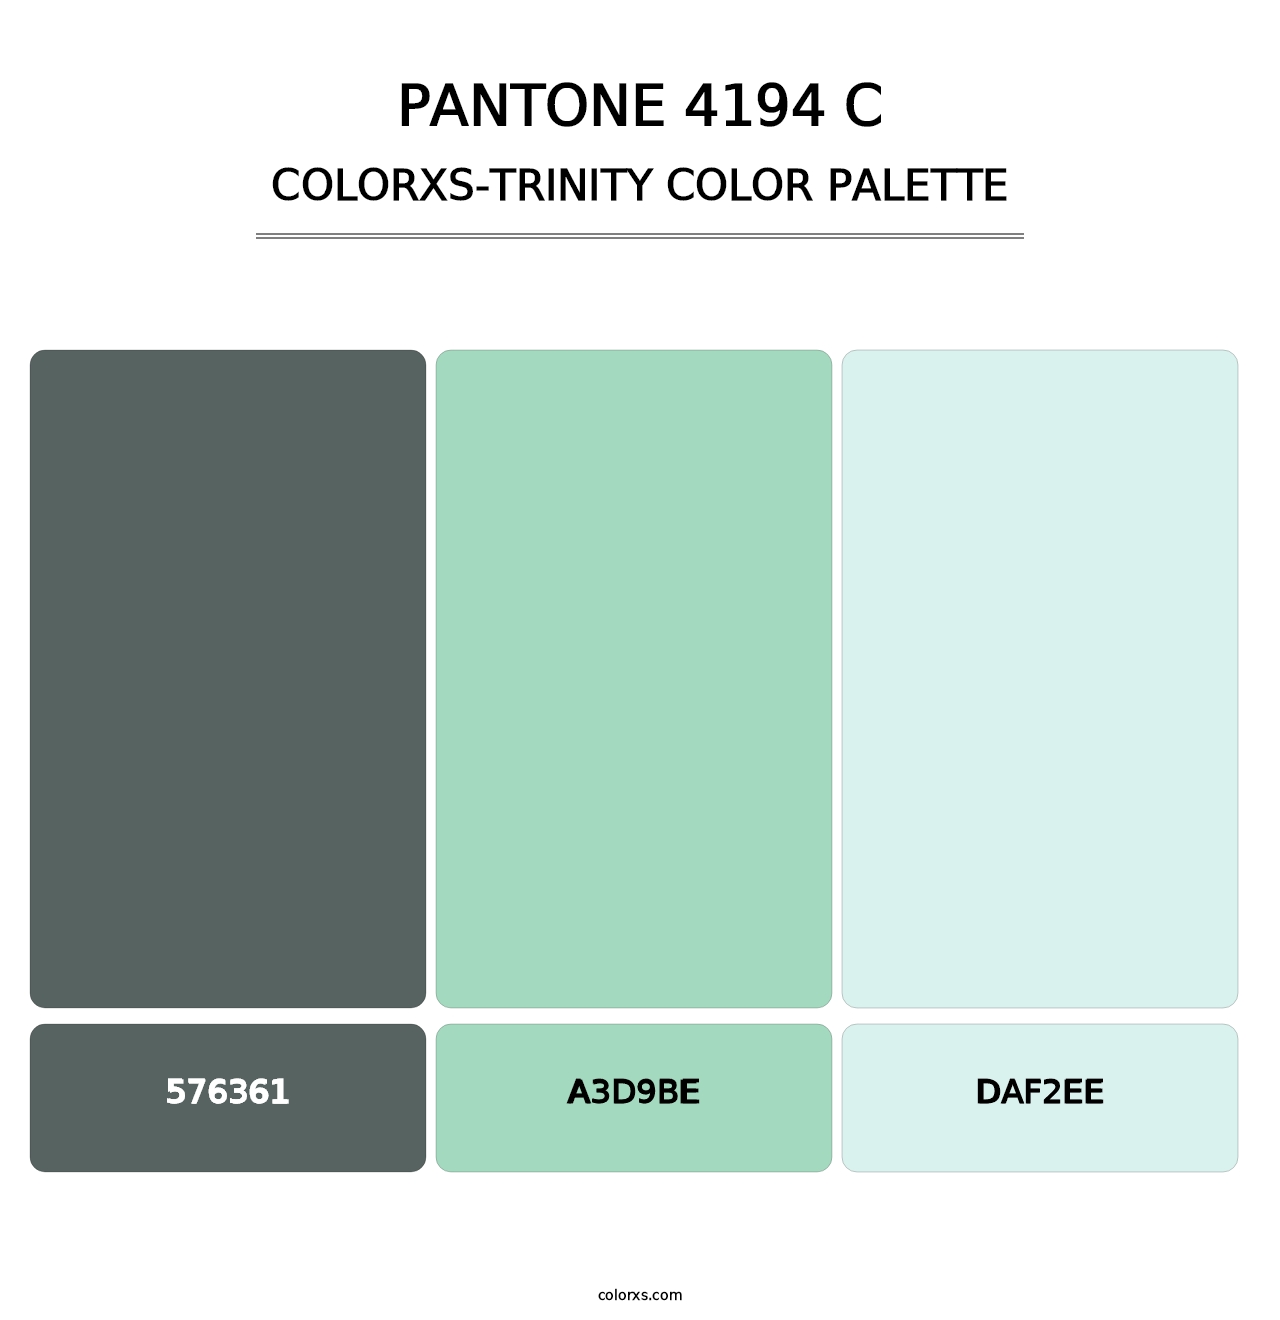 PANTONE 4194 C - Colorxs Trinity Palette